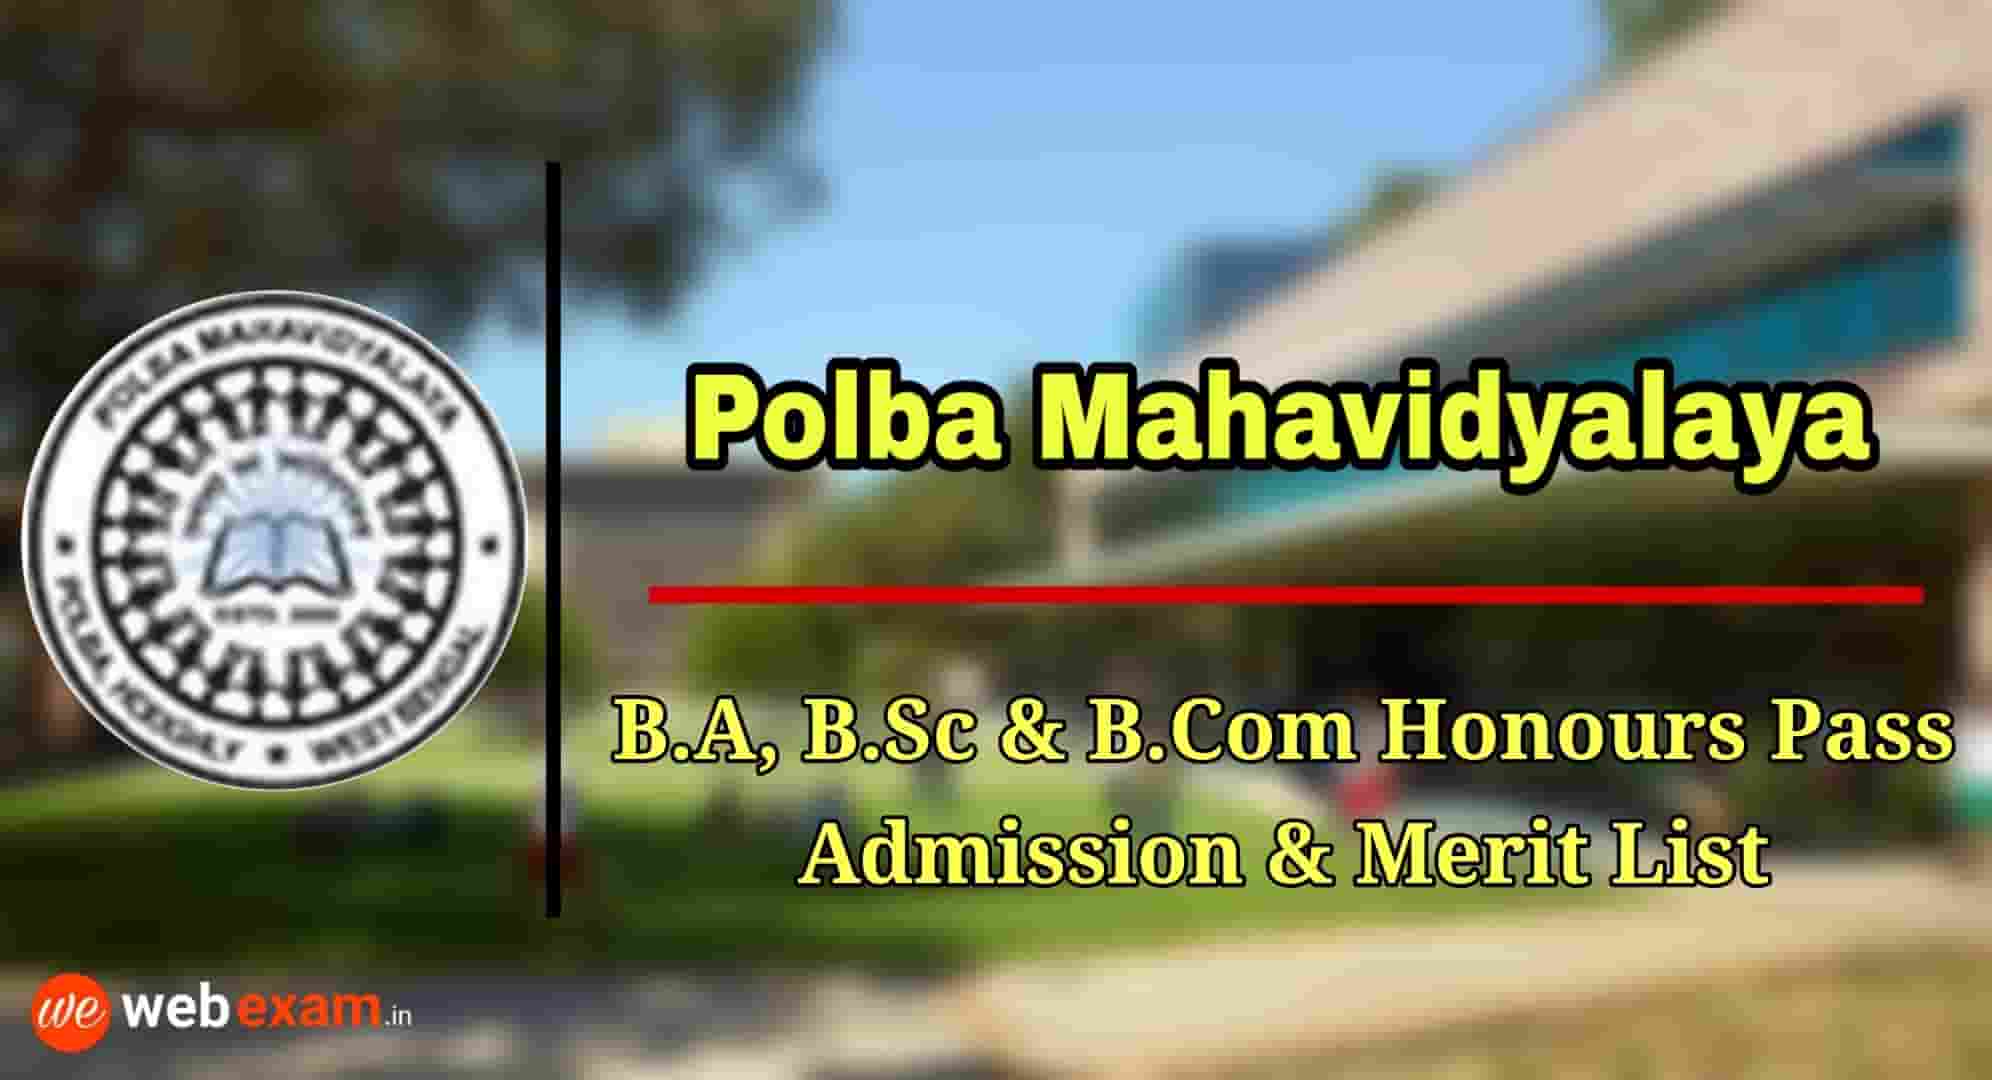 Polba Mahavidyalaya Admission